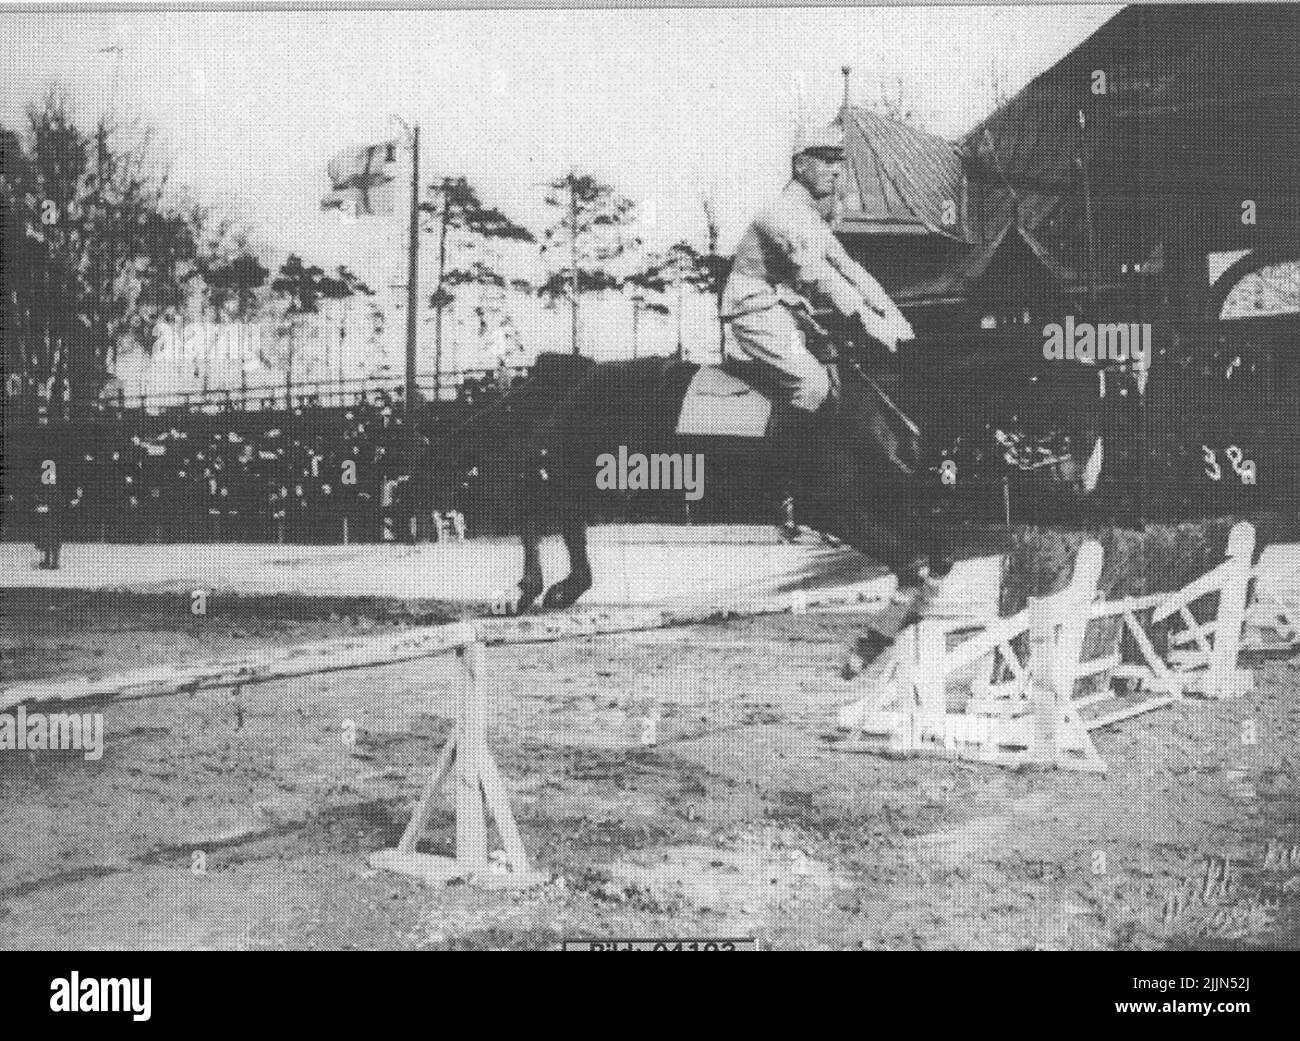 K3. Price jumping at Stadion 1920. Stock Photo